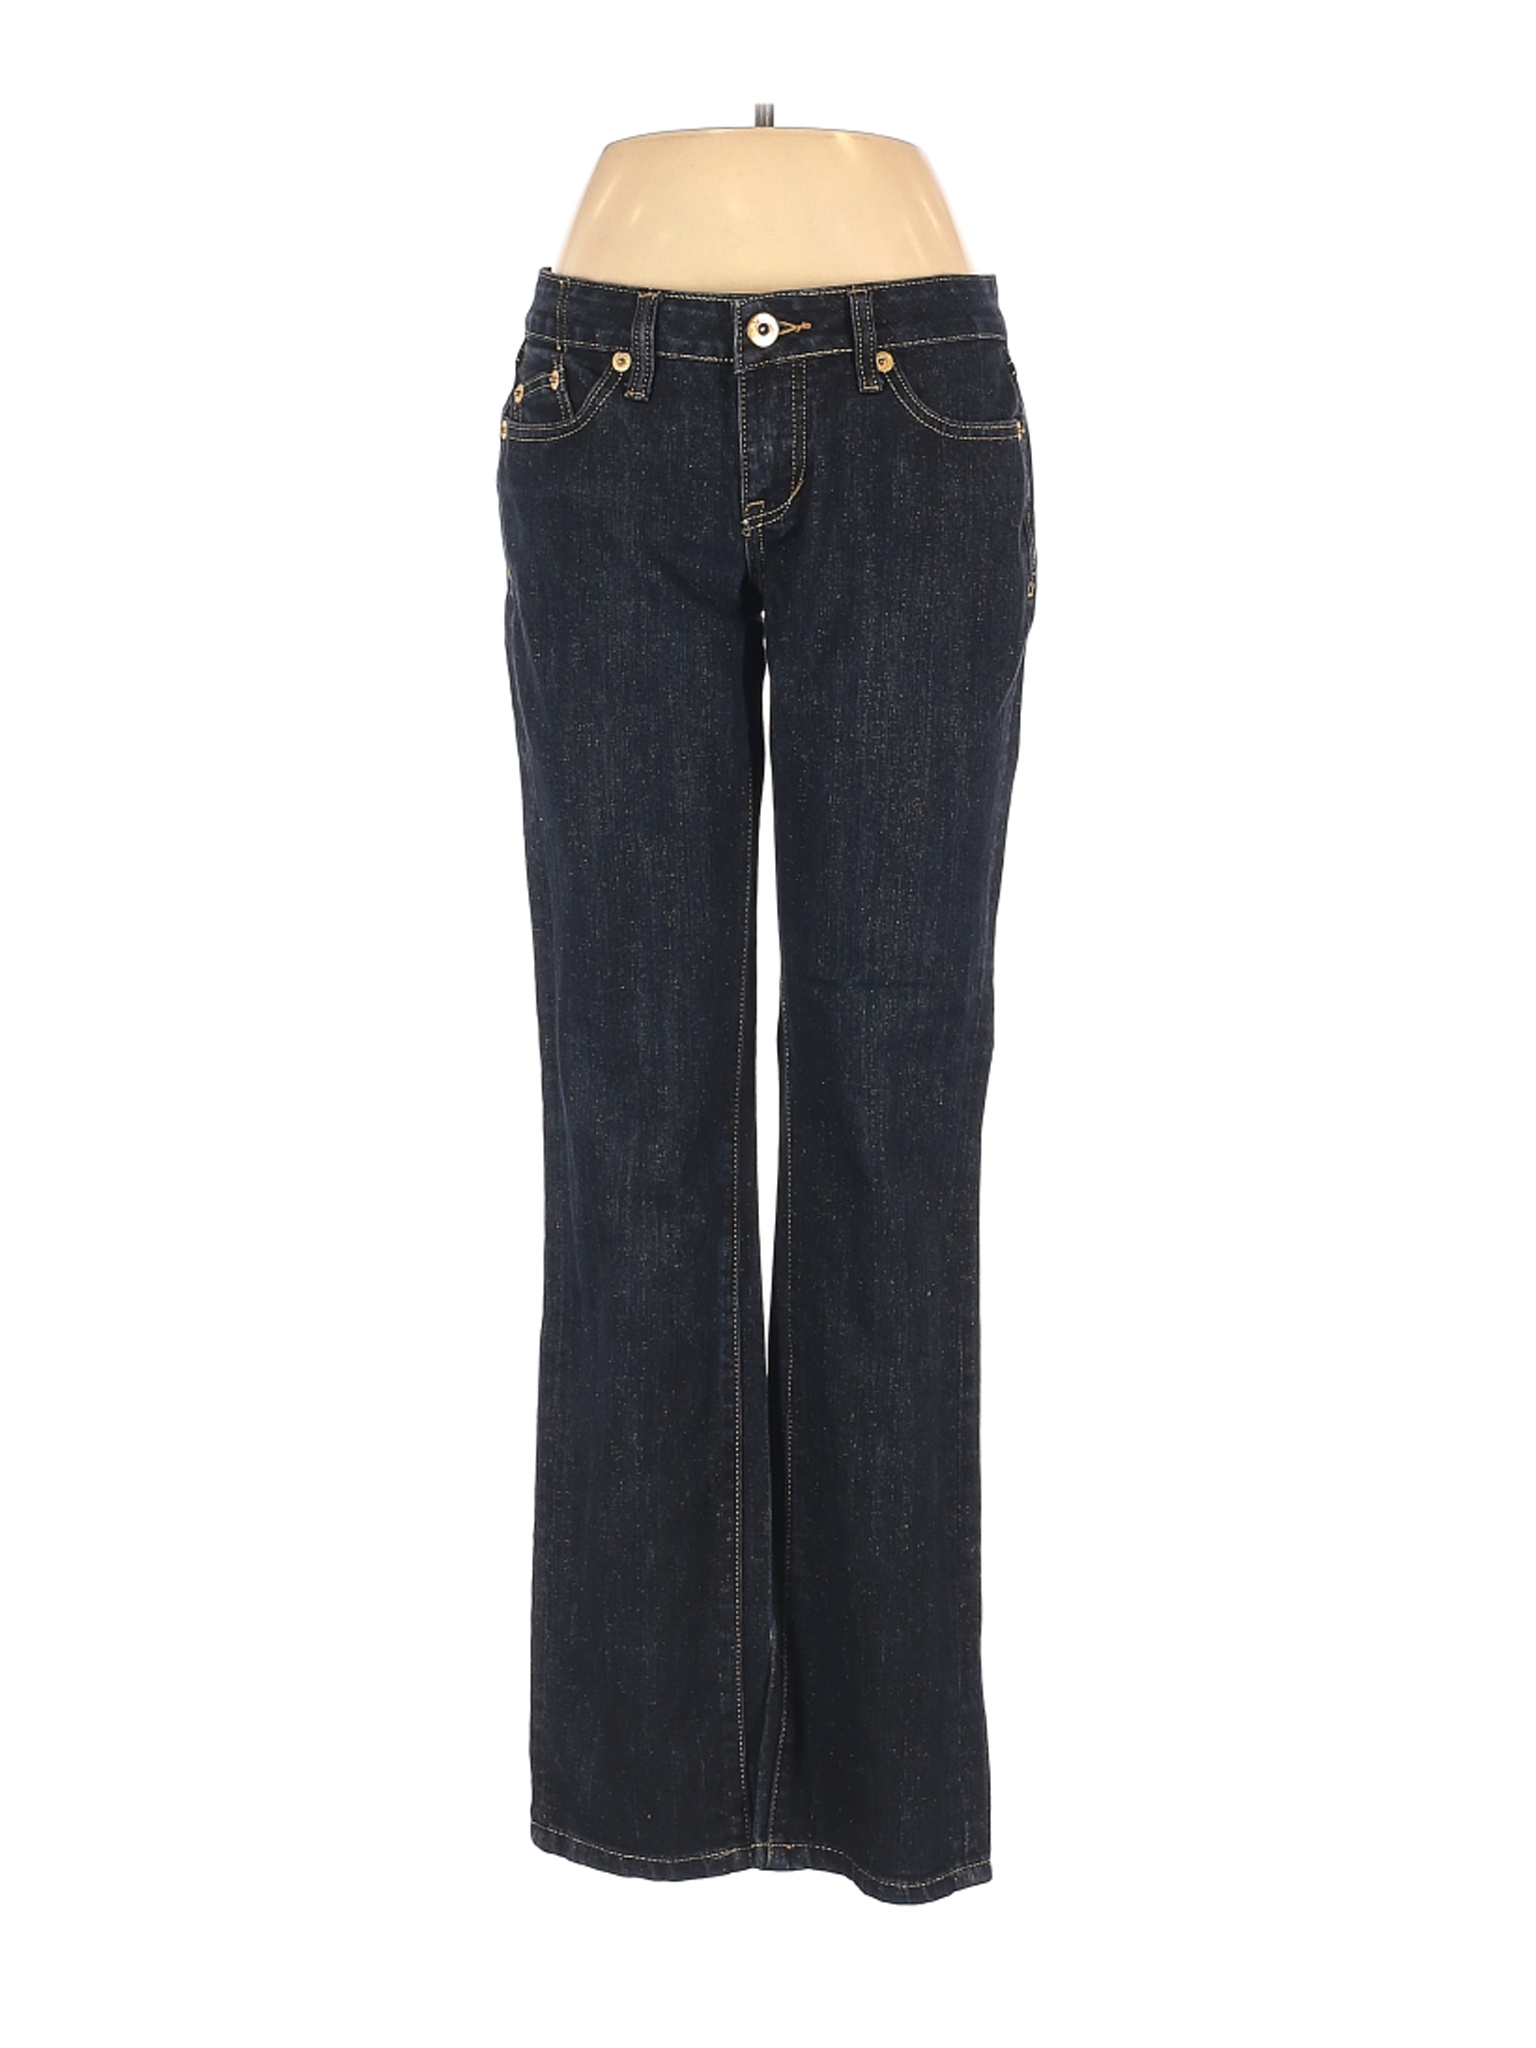 Vanilla Star Women Blue Jeans 9 | eBay